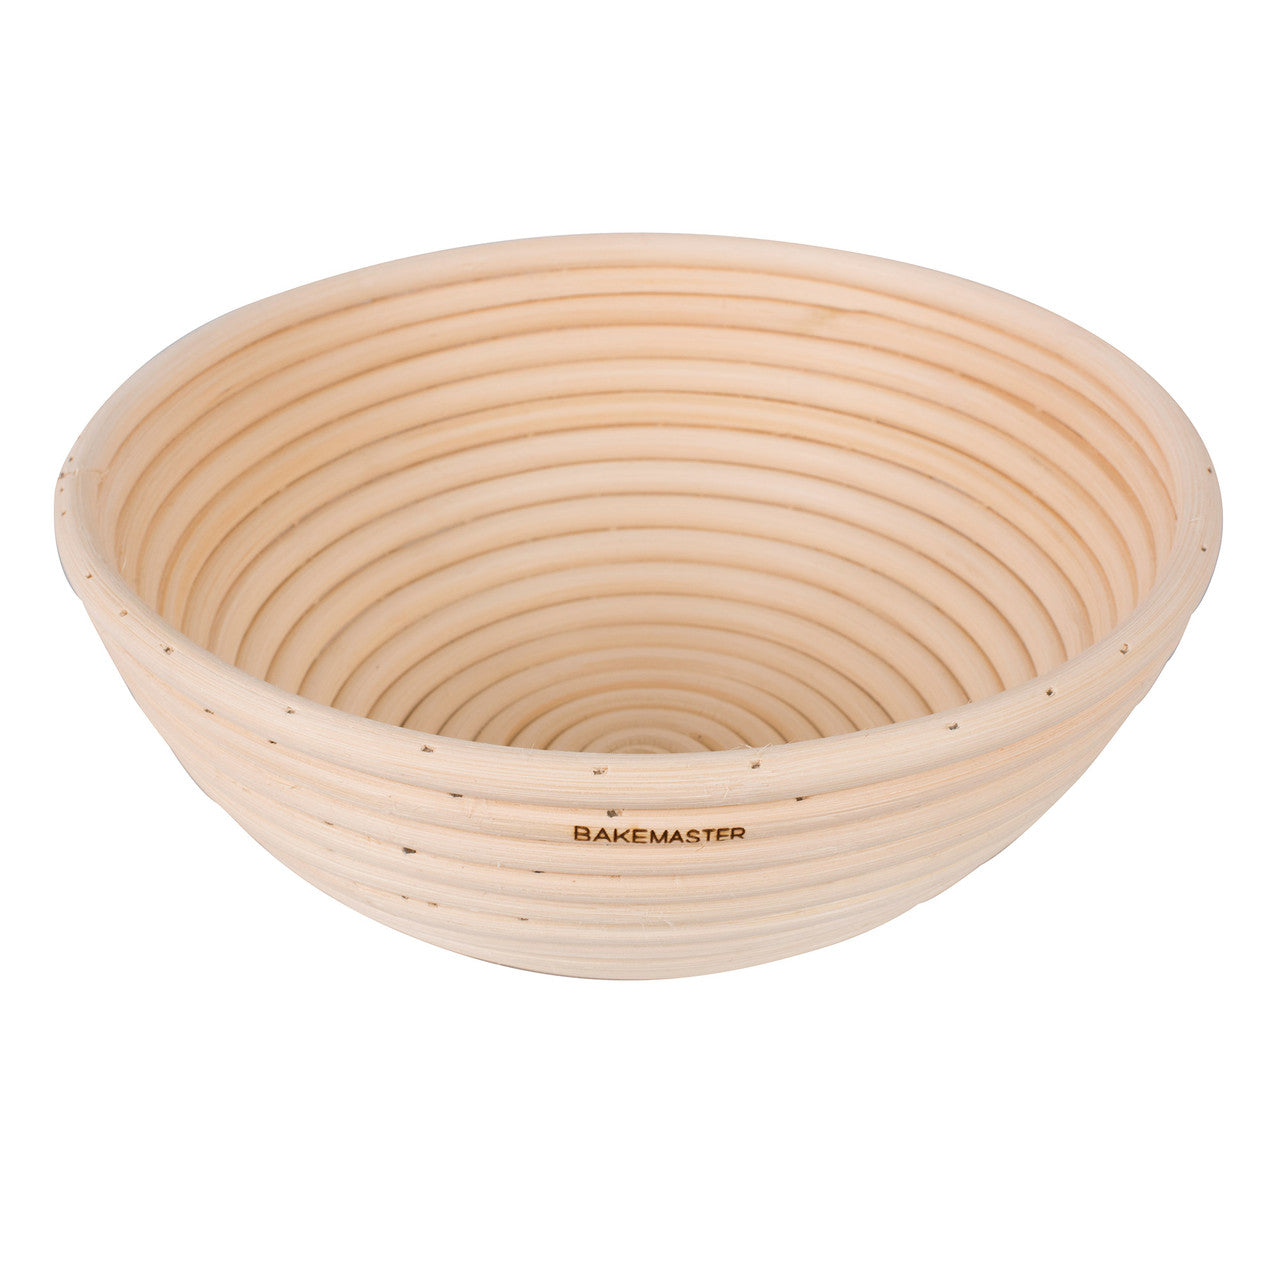 Bakemaster Round Proving Basket, 22 x 8.5cm - Rattan